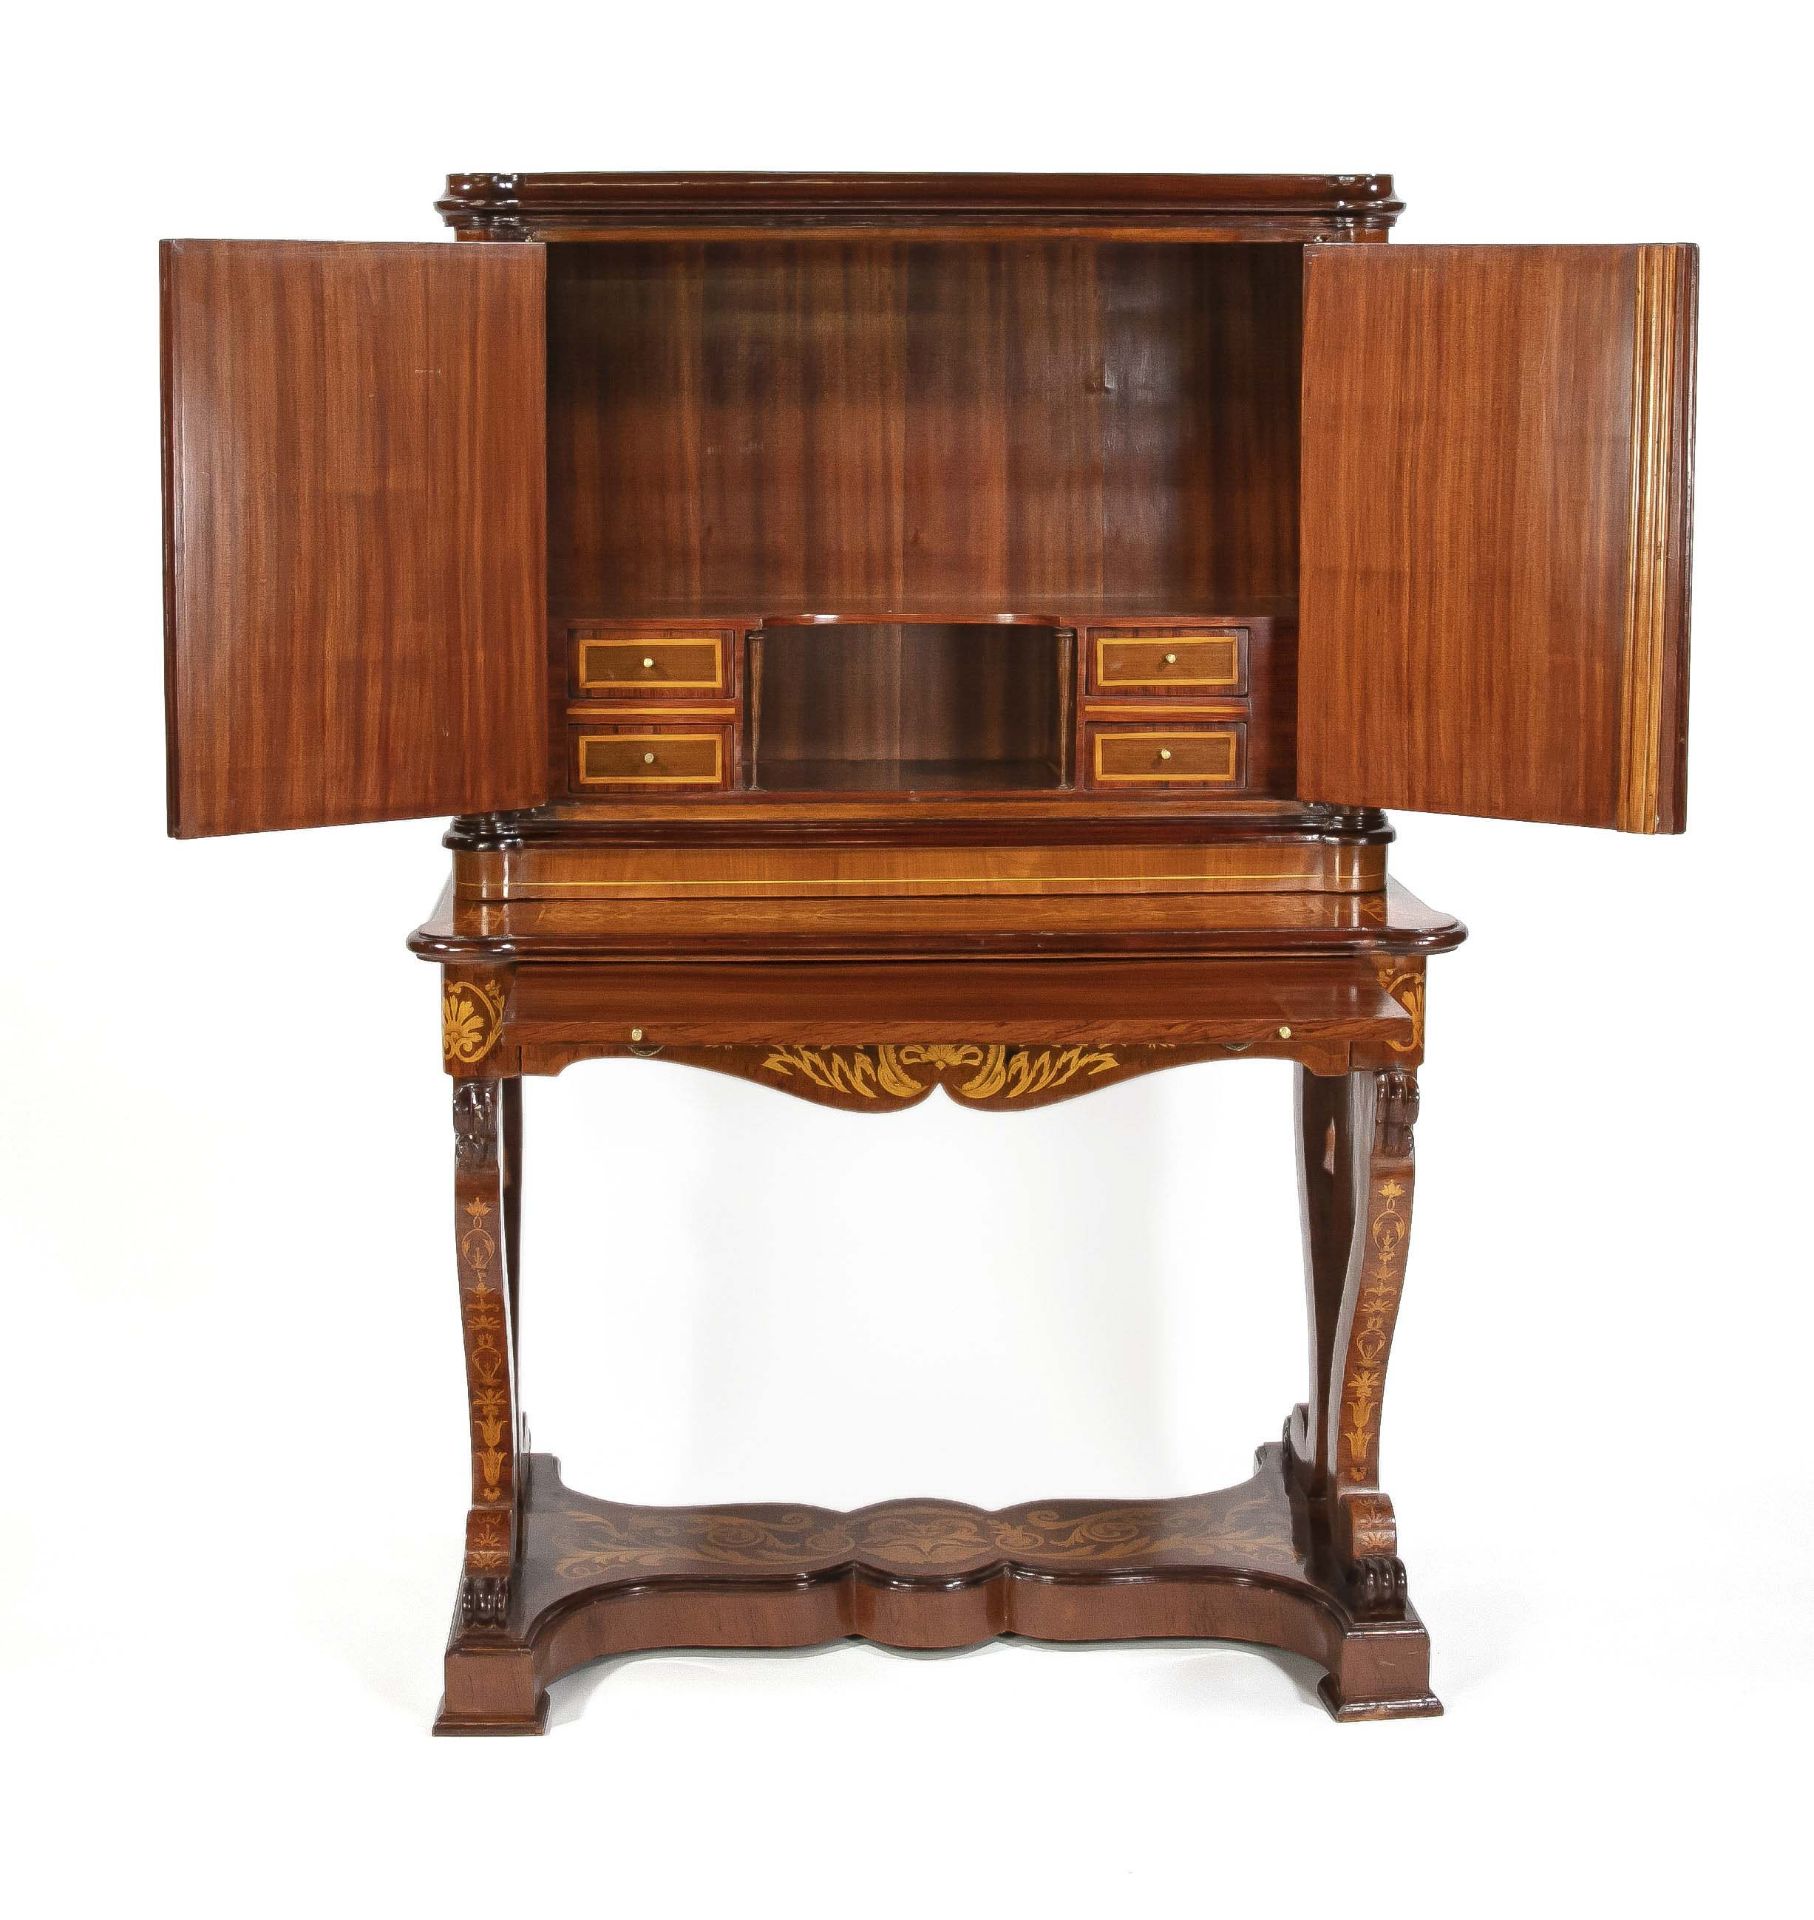 Writing cabinet in the style of the Italian master Giovanni Battista Gatti, mahogany and maple - Image 2 of 3